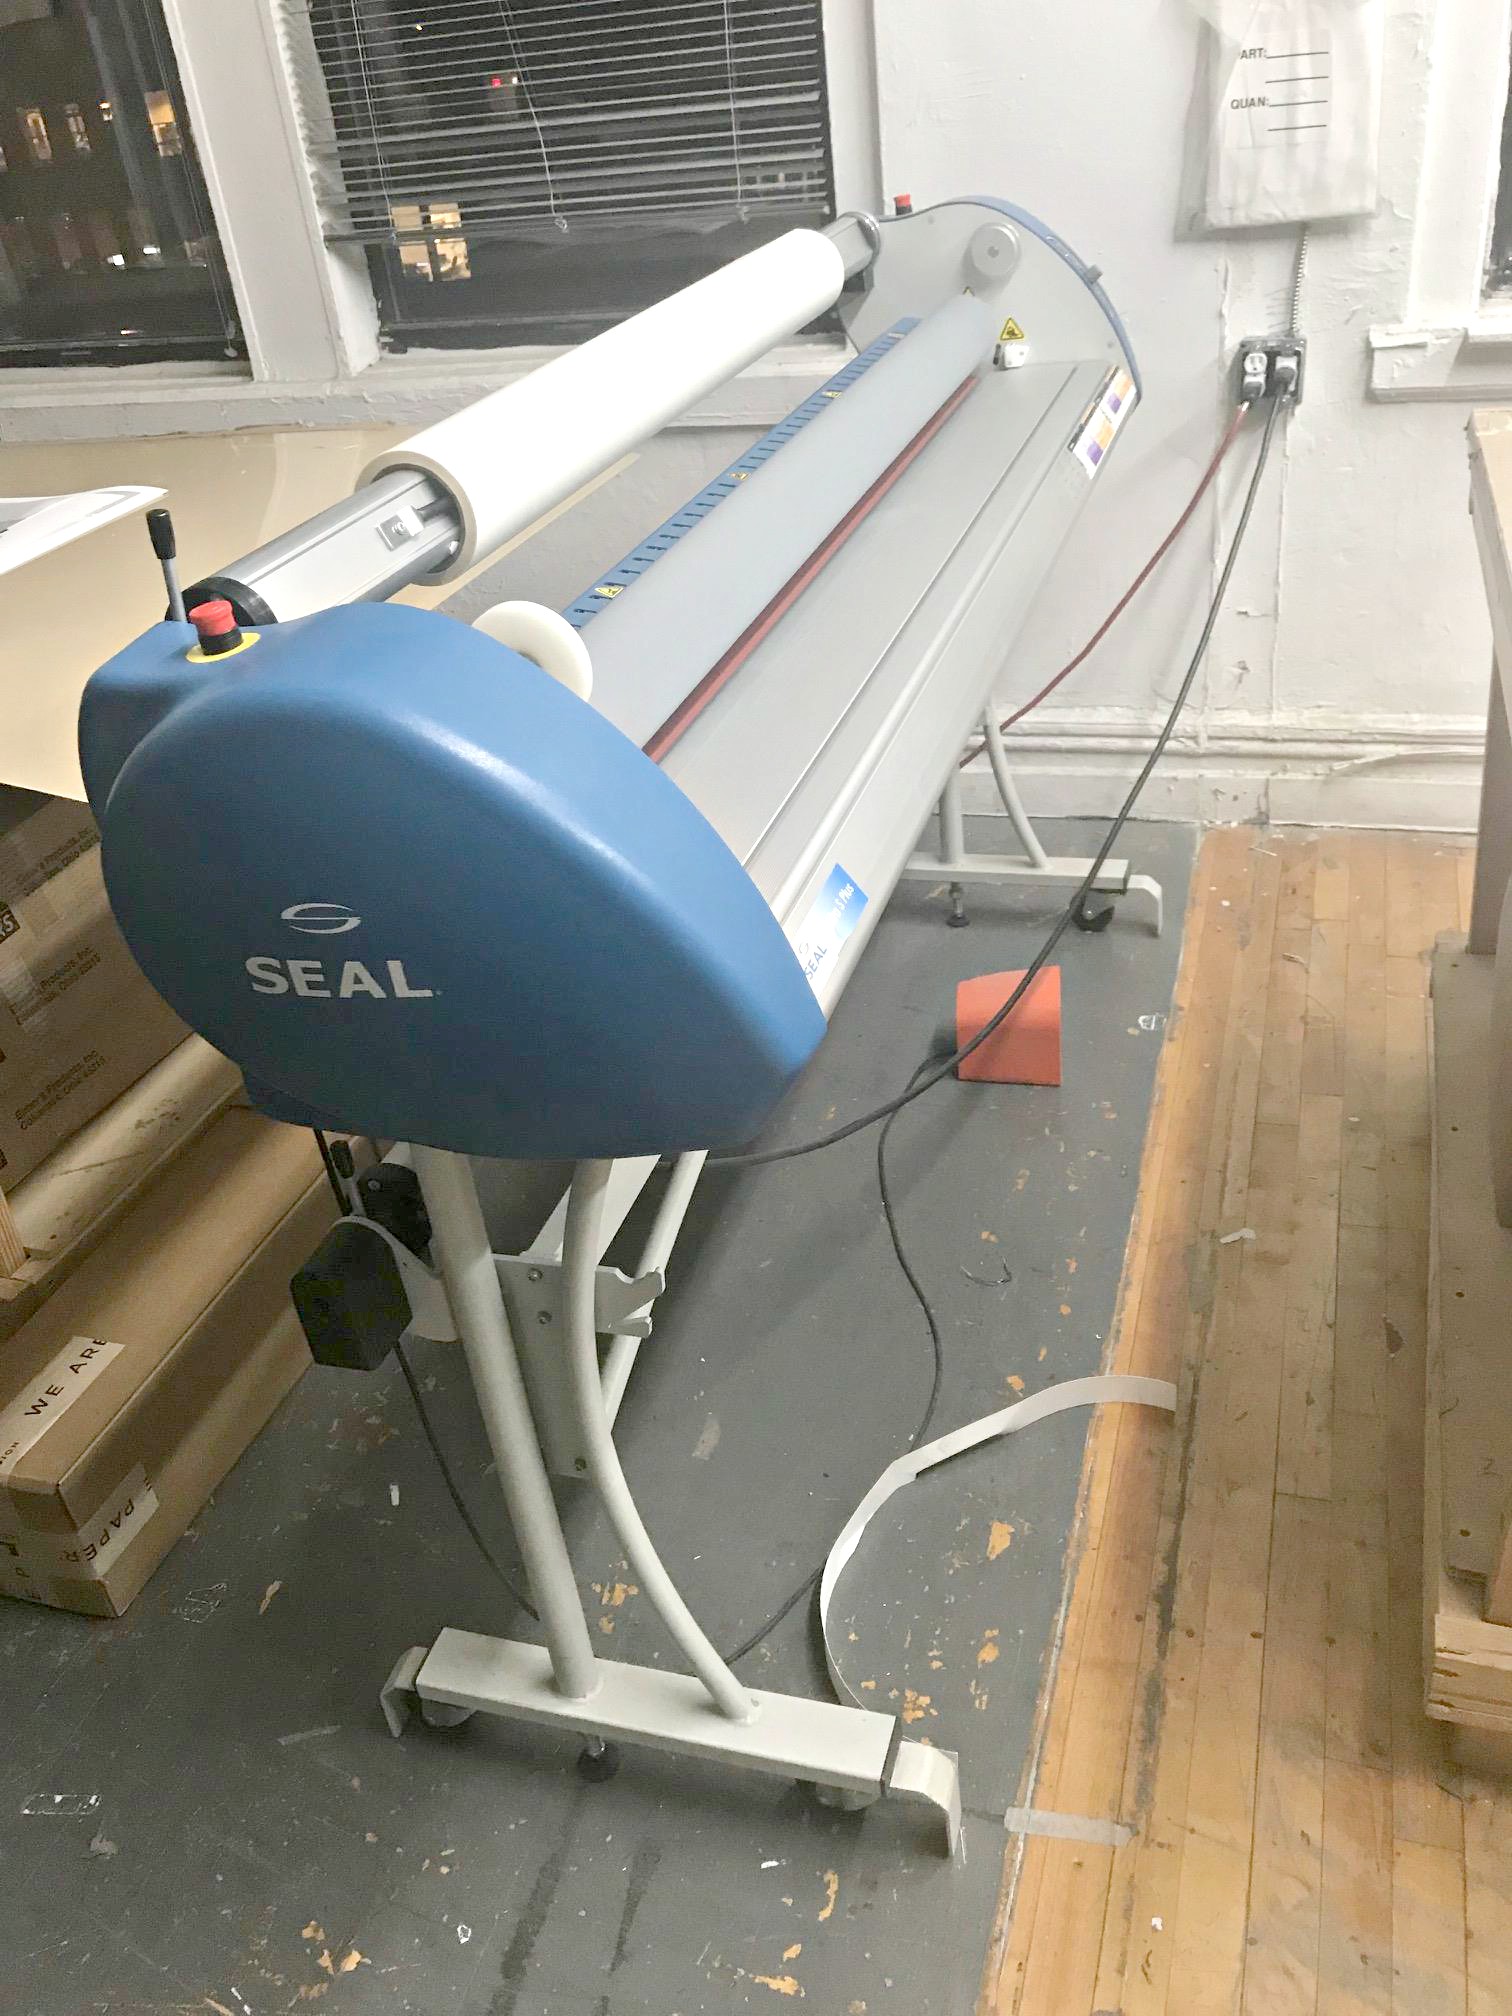 Seal 62 Ultra S Plus Roll Laminator (used) Item # UPE-7